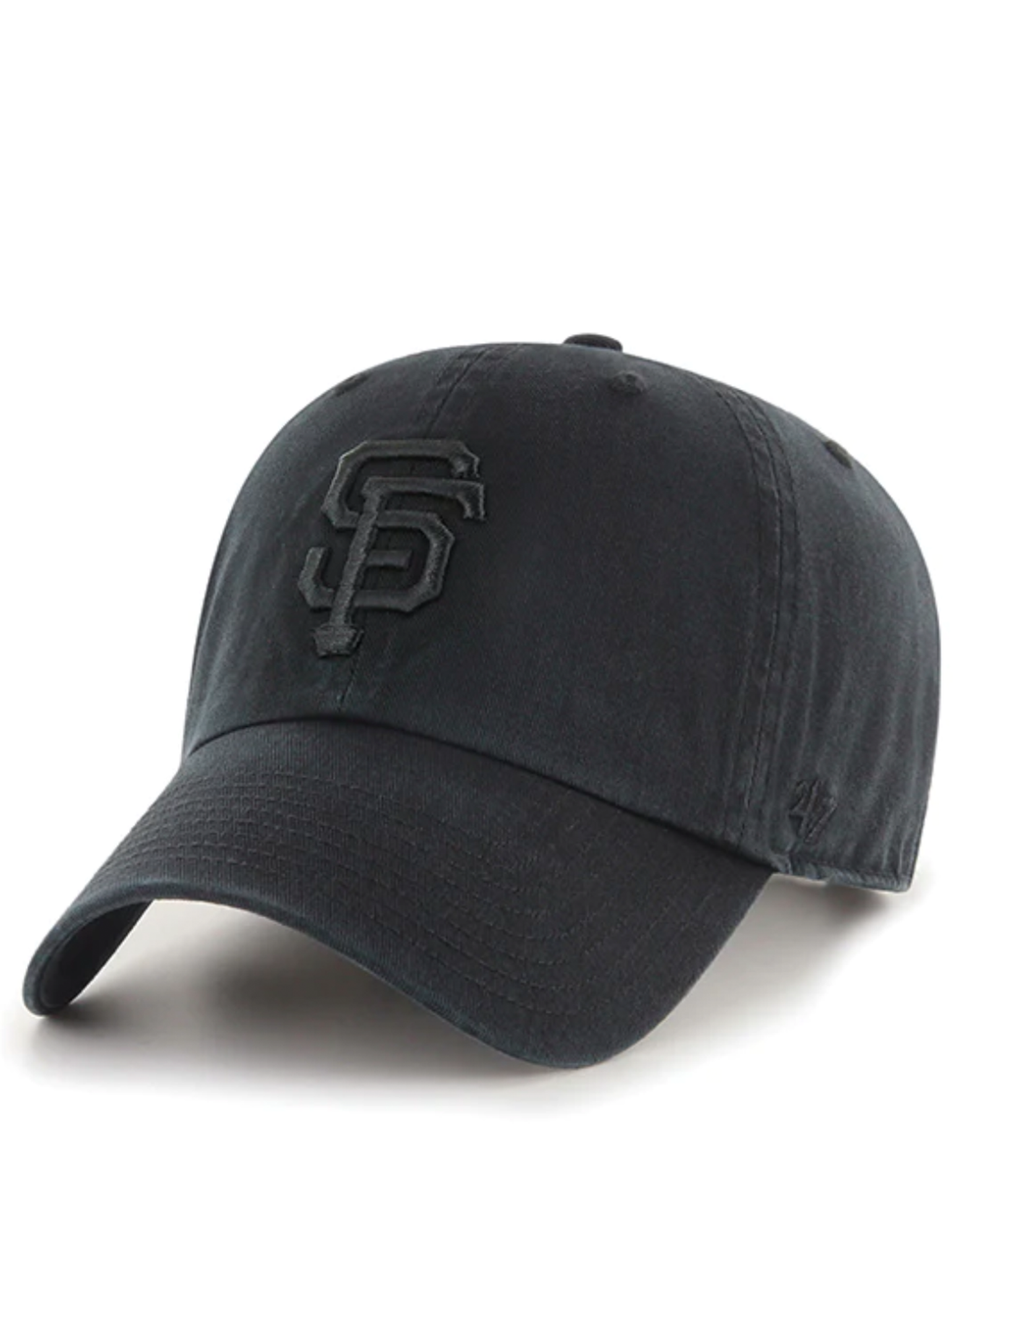 SF Giants Basic Ball Cap, Black/Black